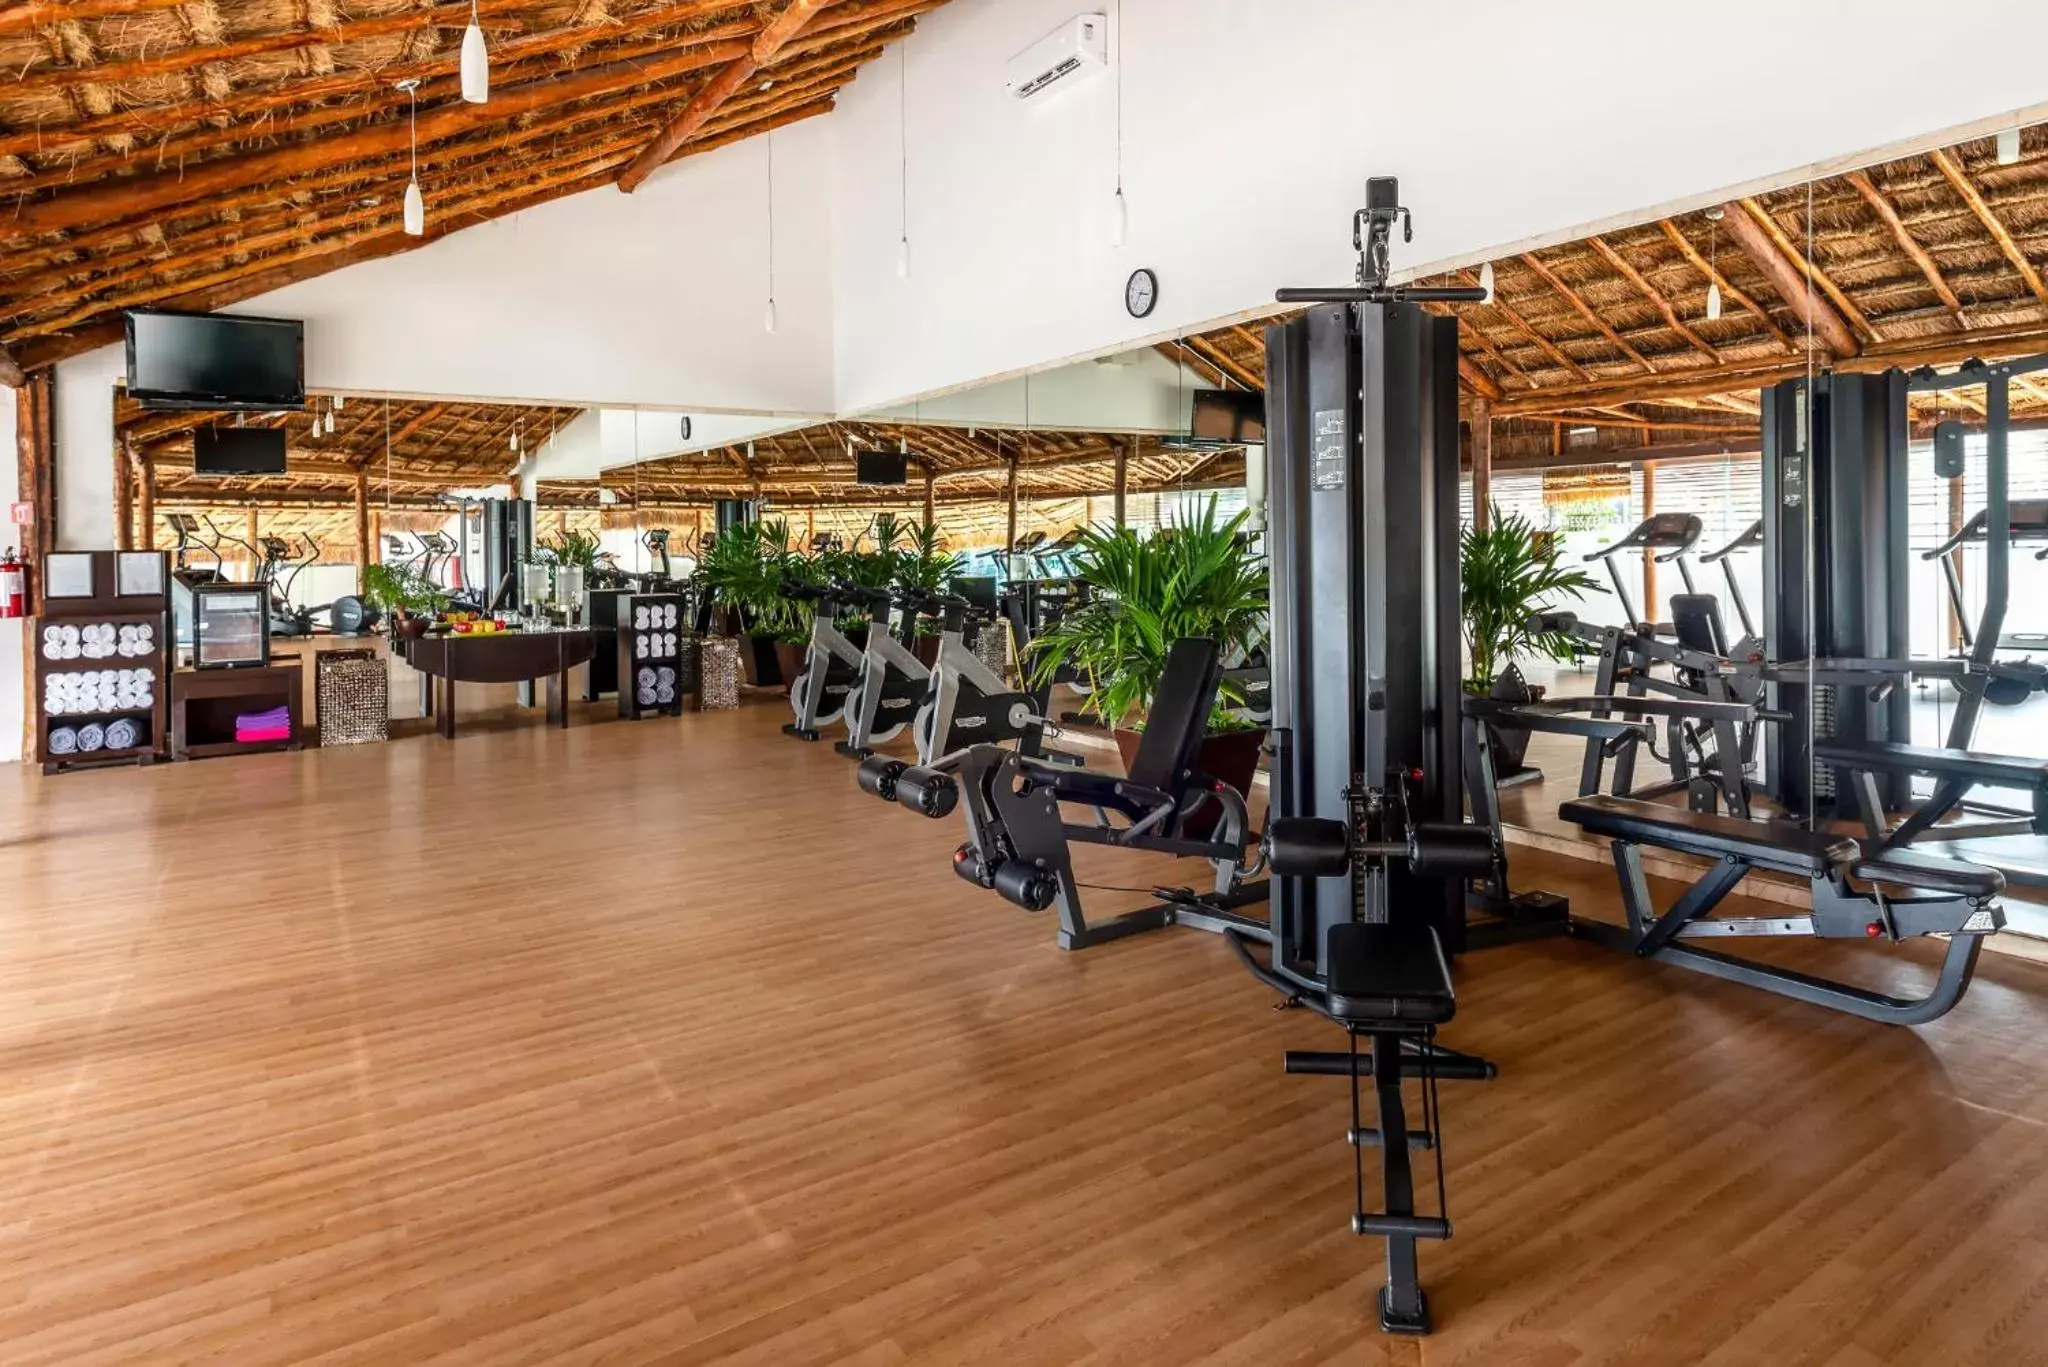 Fitness centre/facilities, Fitness Center/Facilities in InterContinental Presidente Cancun Resort